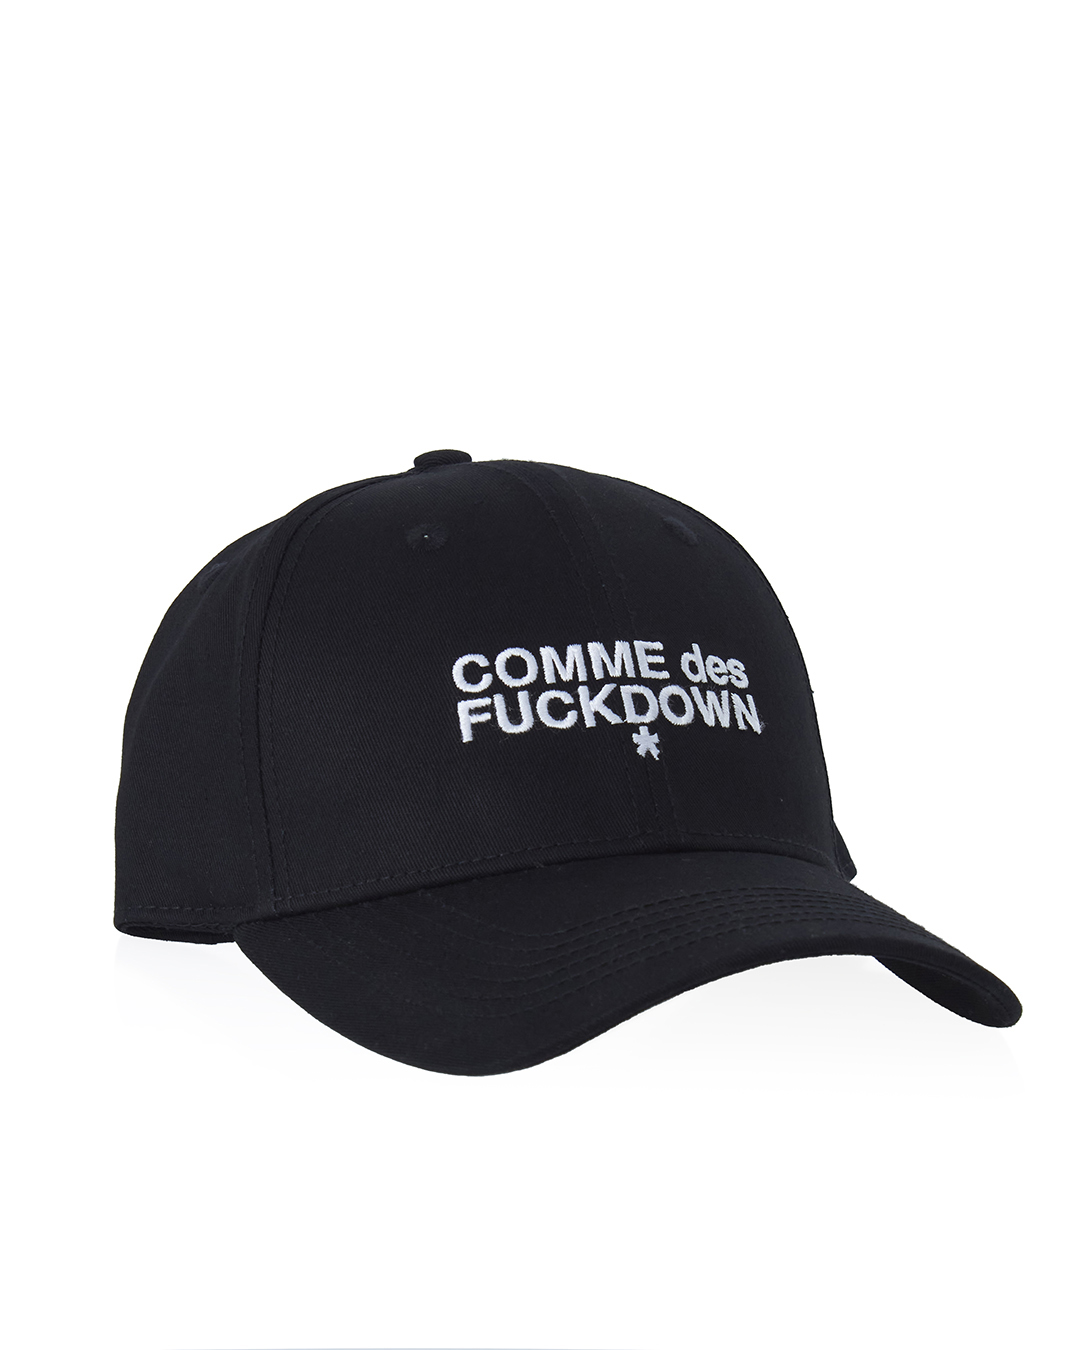 COMME des FUCKDOWN с вышивкой логотипа бренда  артикул  марки COMME des FUCKDOWN купить за 8800 руб.